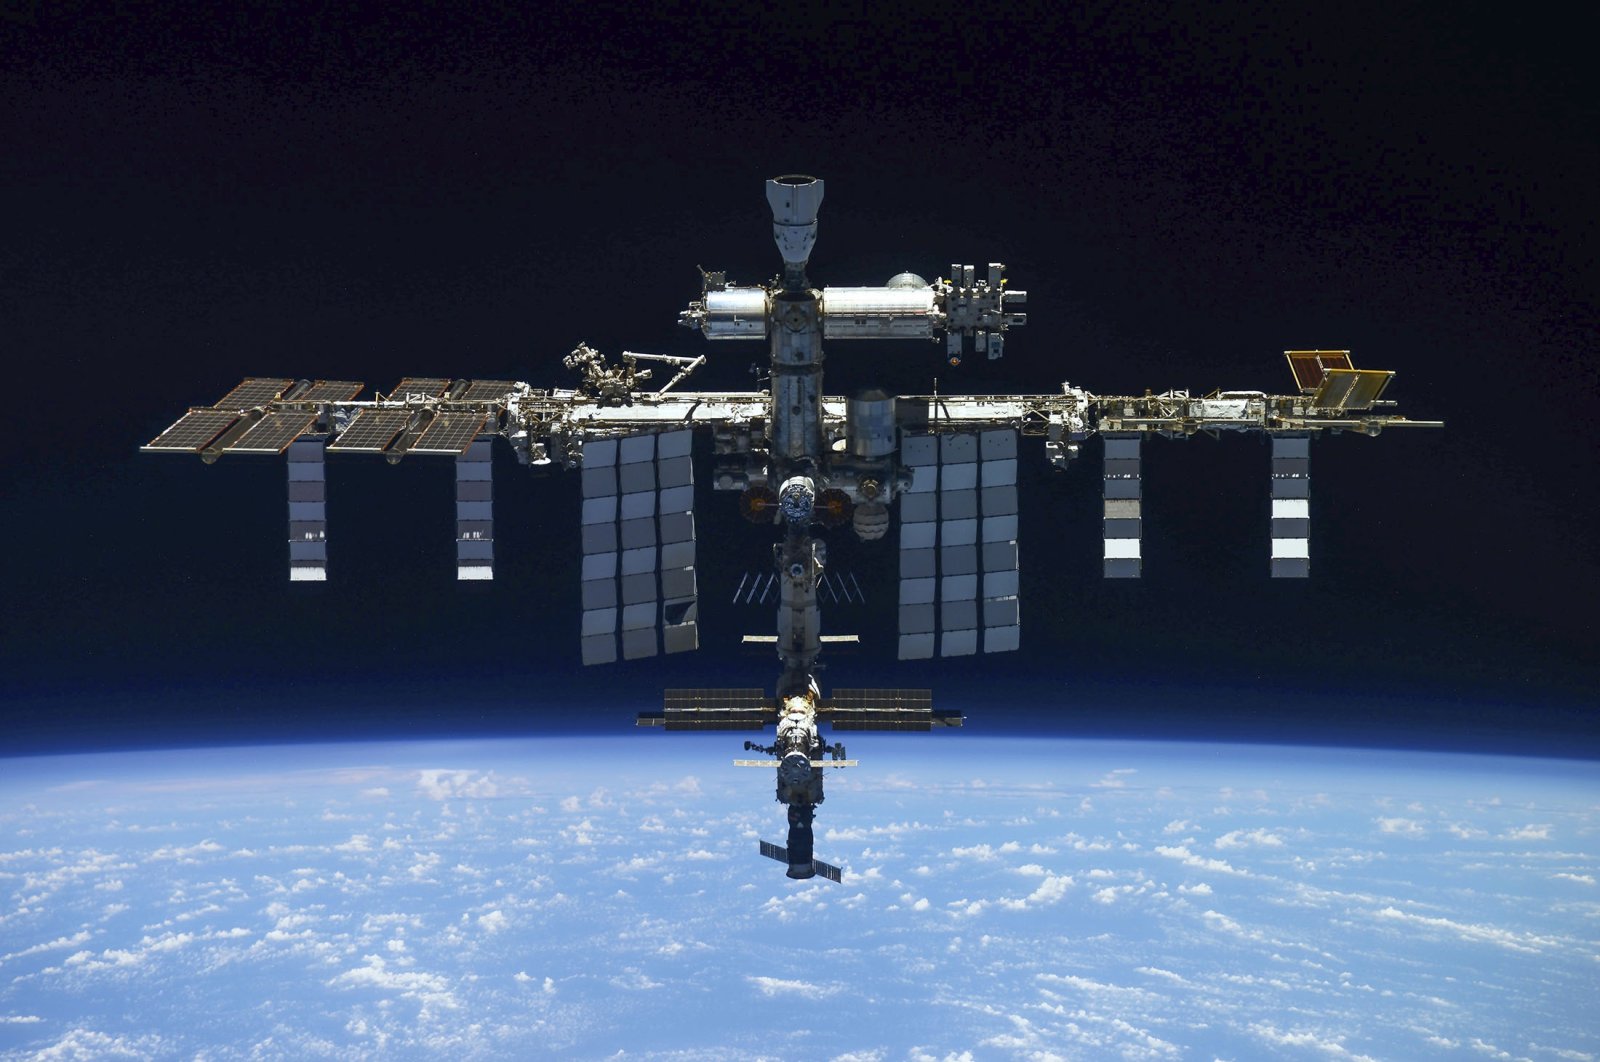 Mikrometeorit kemungkinan tersangka di balik kebocoran kapsul Soyuz Rusia